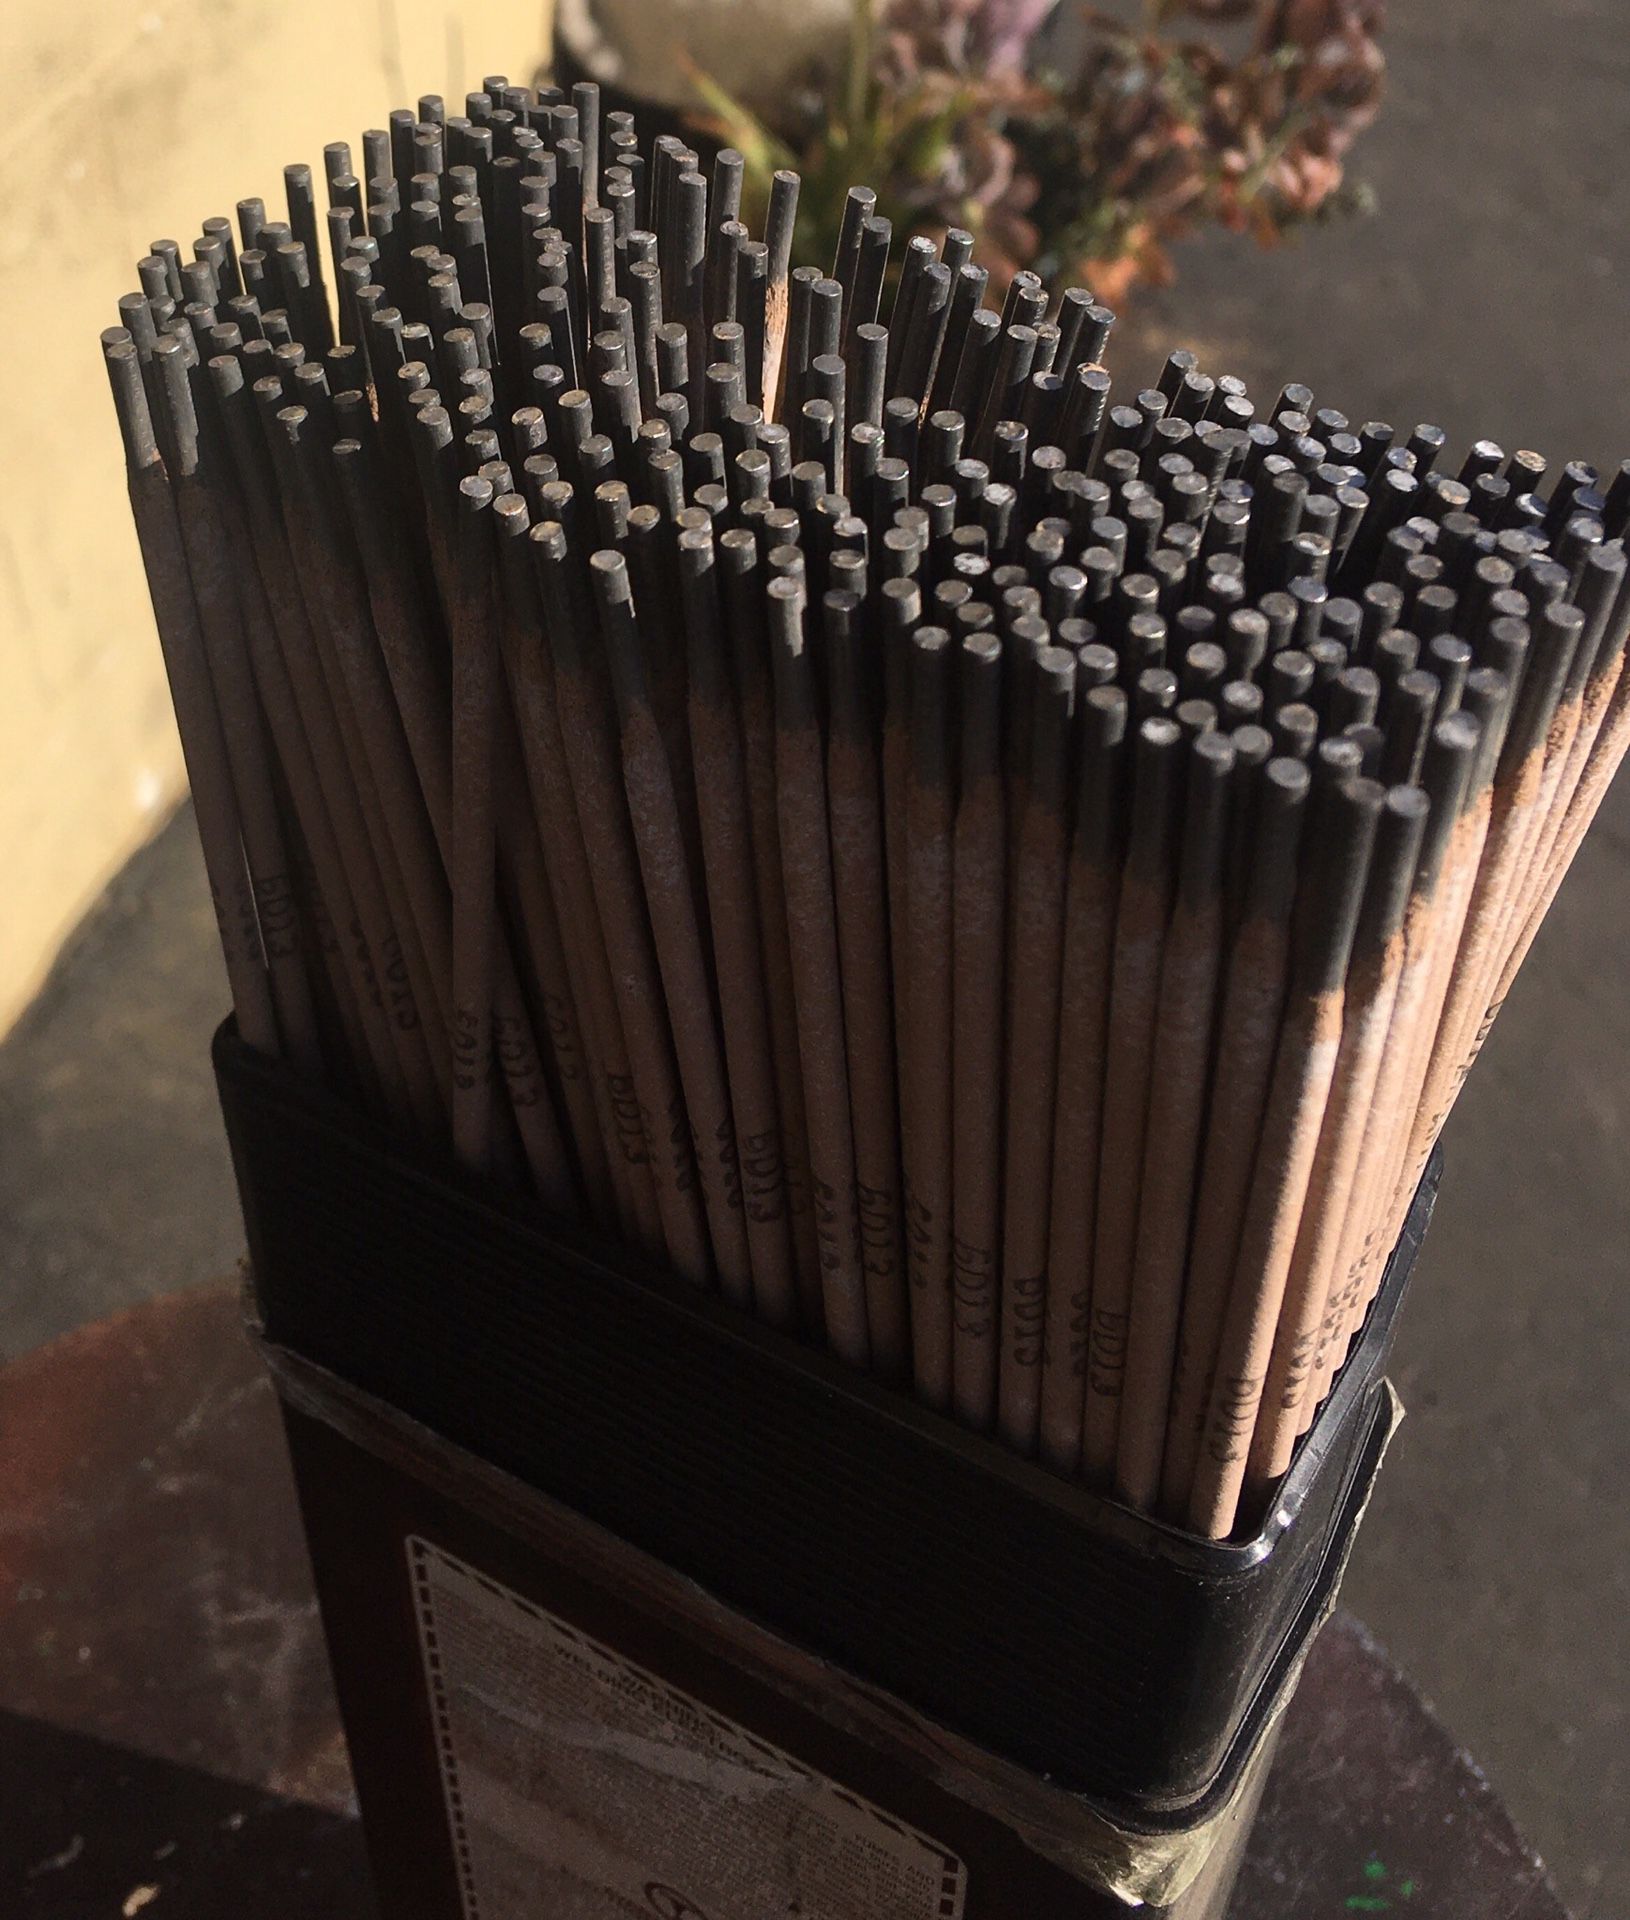 Hobart Welding Rods for Arc welder - 3/32” E6013 electrodes 10# box